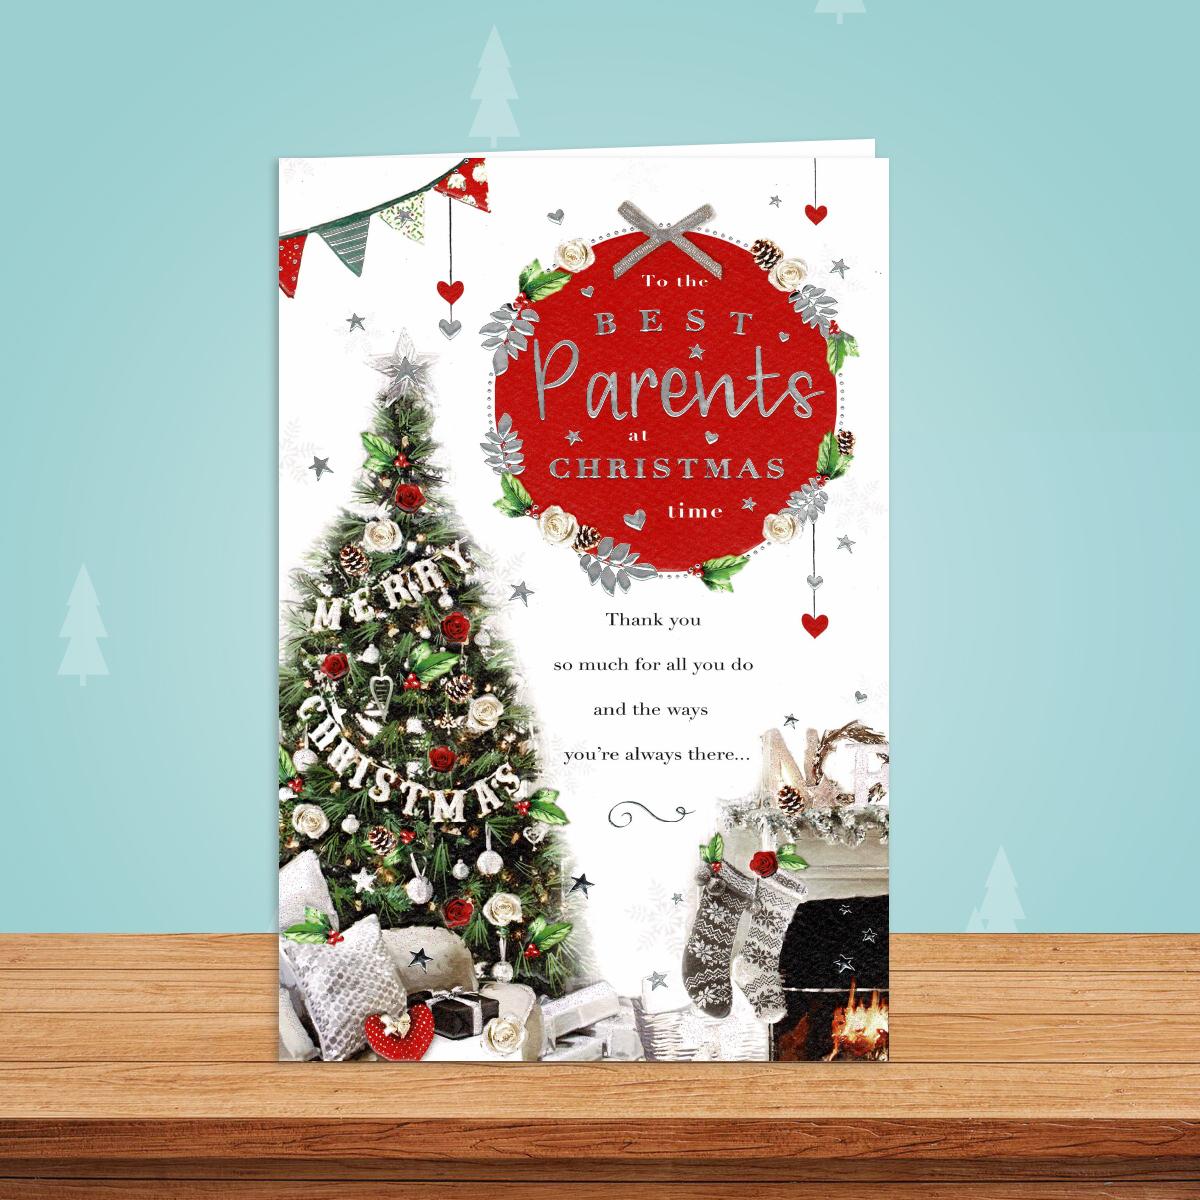 Best Parents Christmas Card Alongside Its Red Envelope